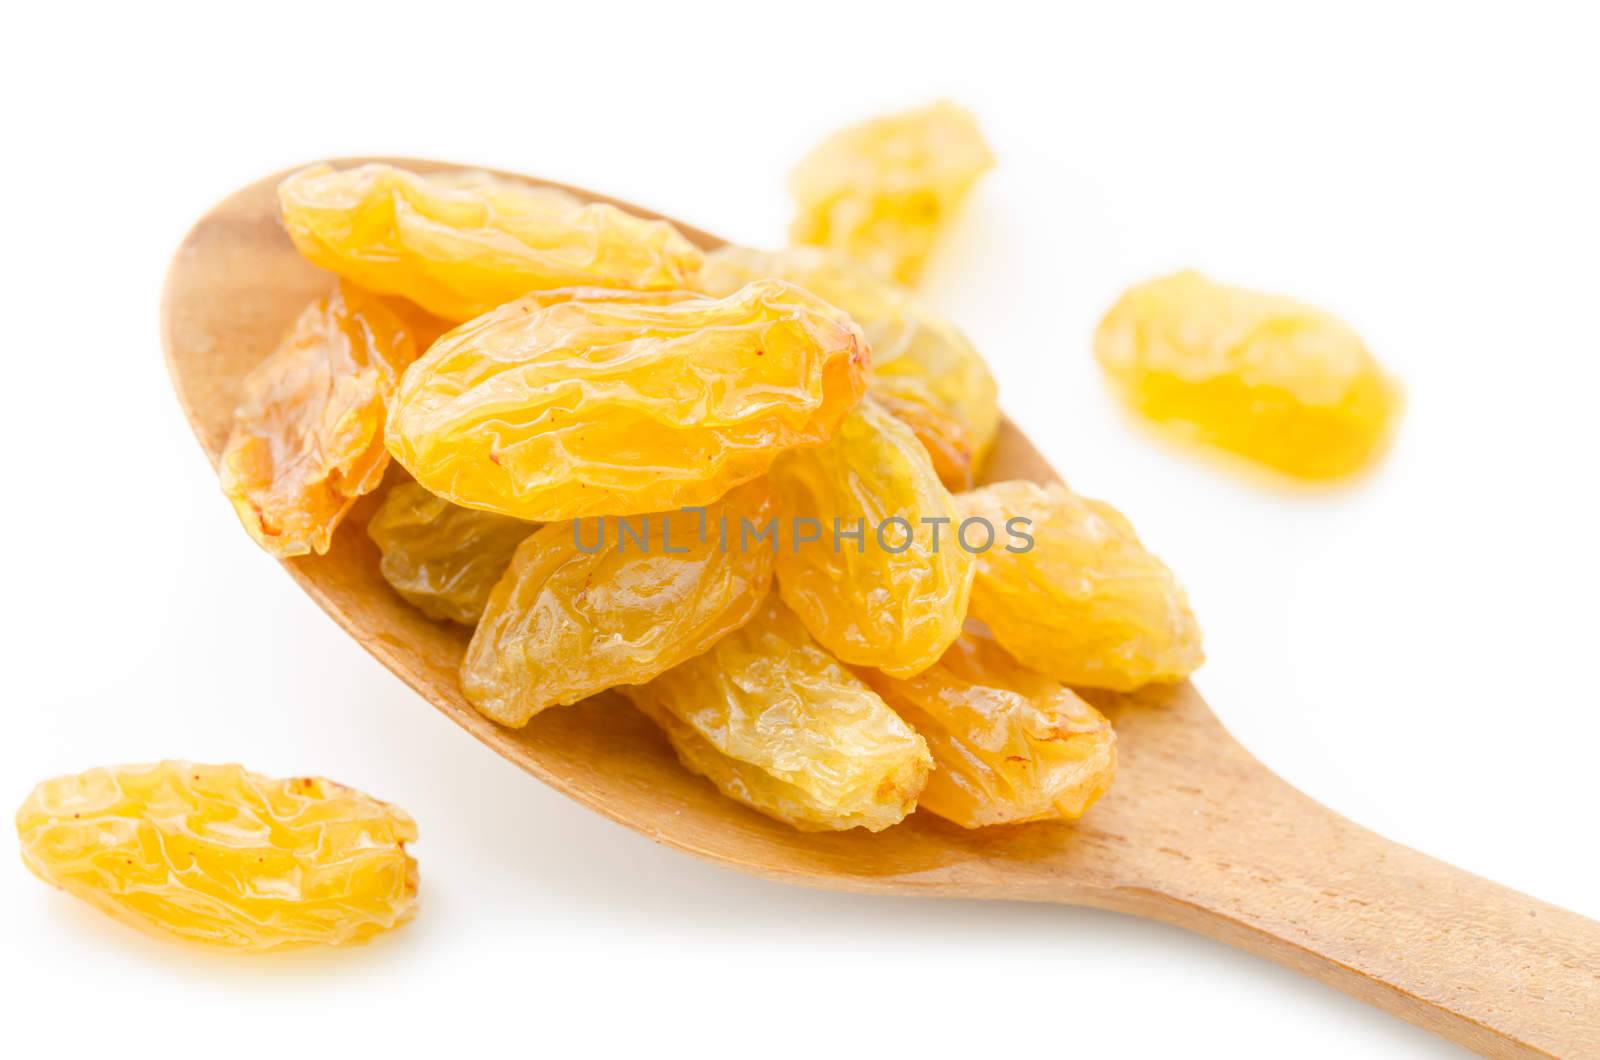 Yellow or gold raisins. by Gamjai